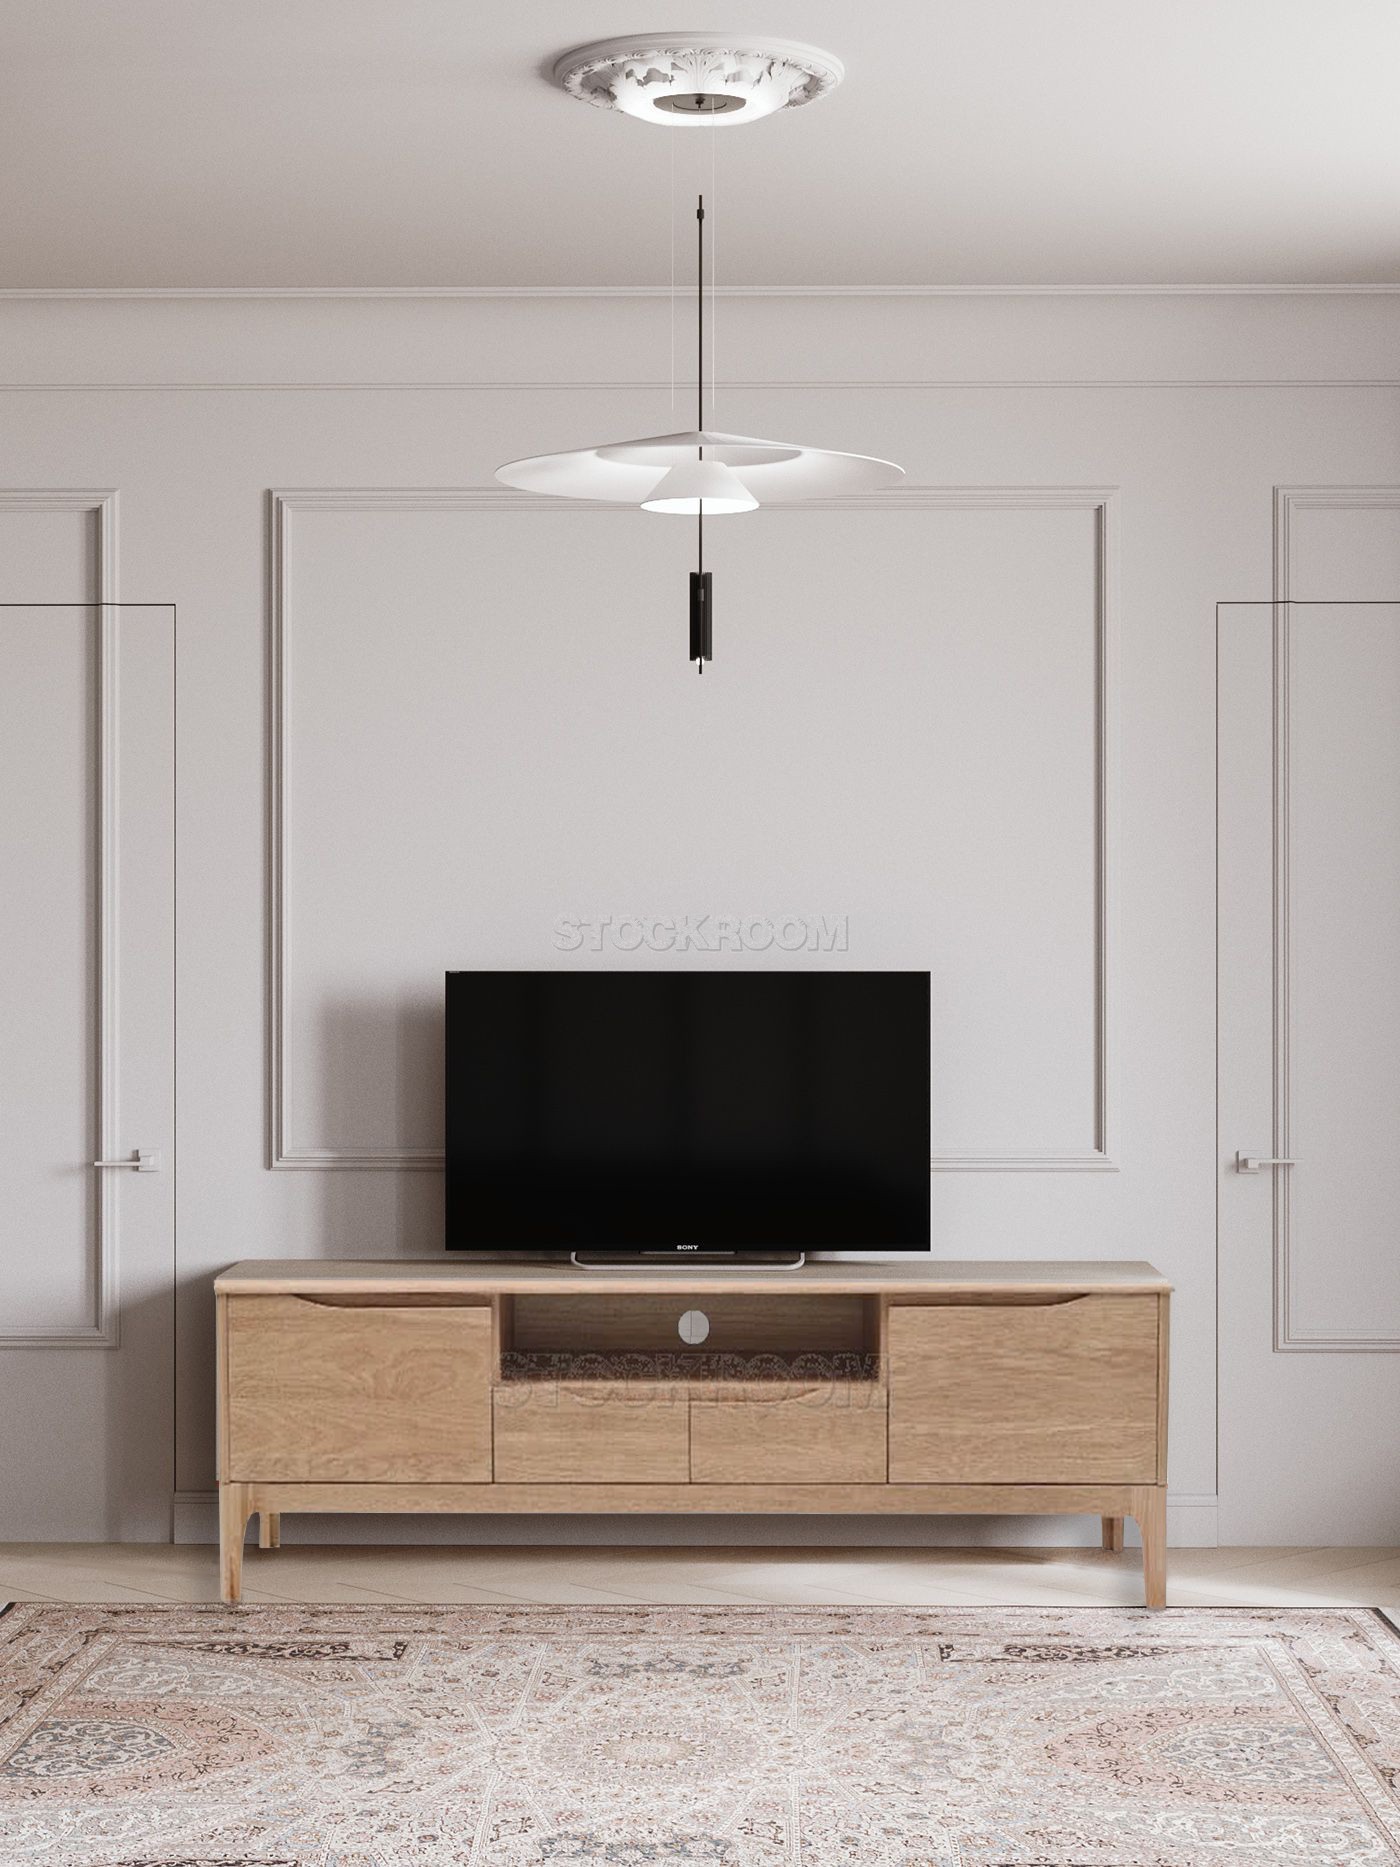 Egan Solid Oak Wood TV Cabinet